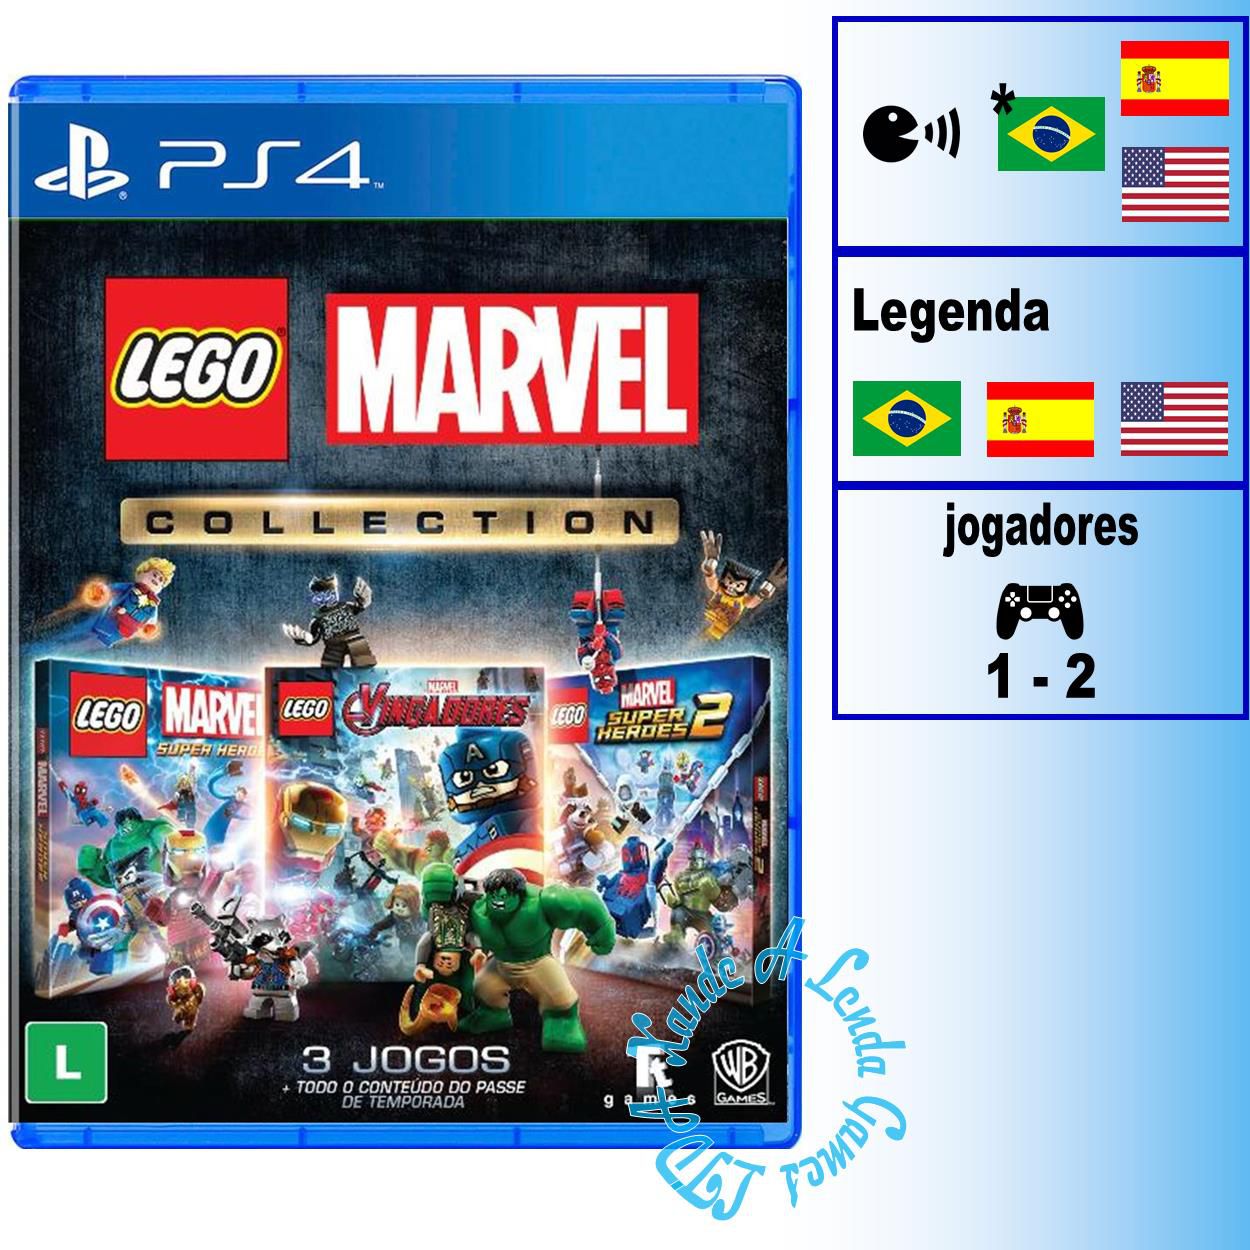 Comprar Lego Marvel Super Heroes para PS4 - mídia física - Xande A Lenda  Games. A sua loja de jogos!